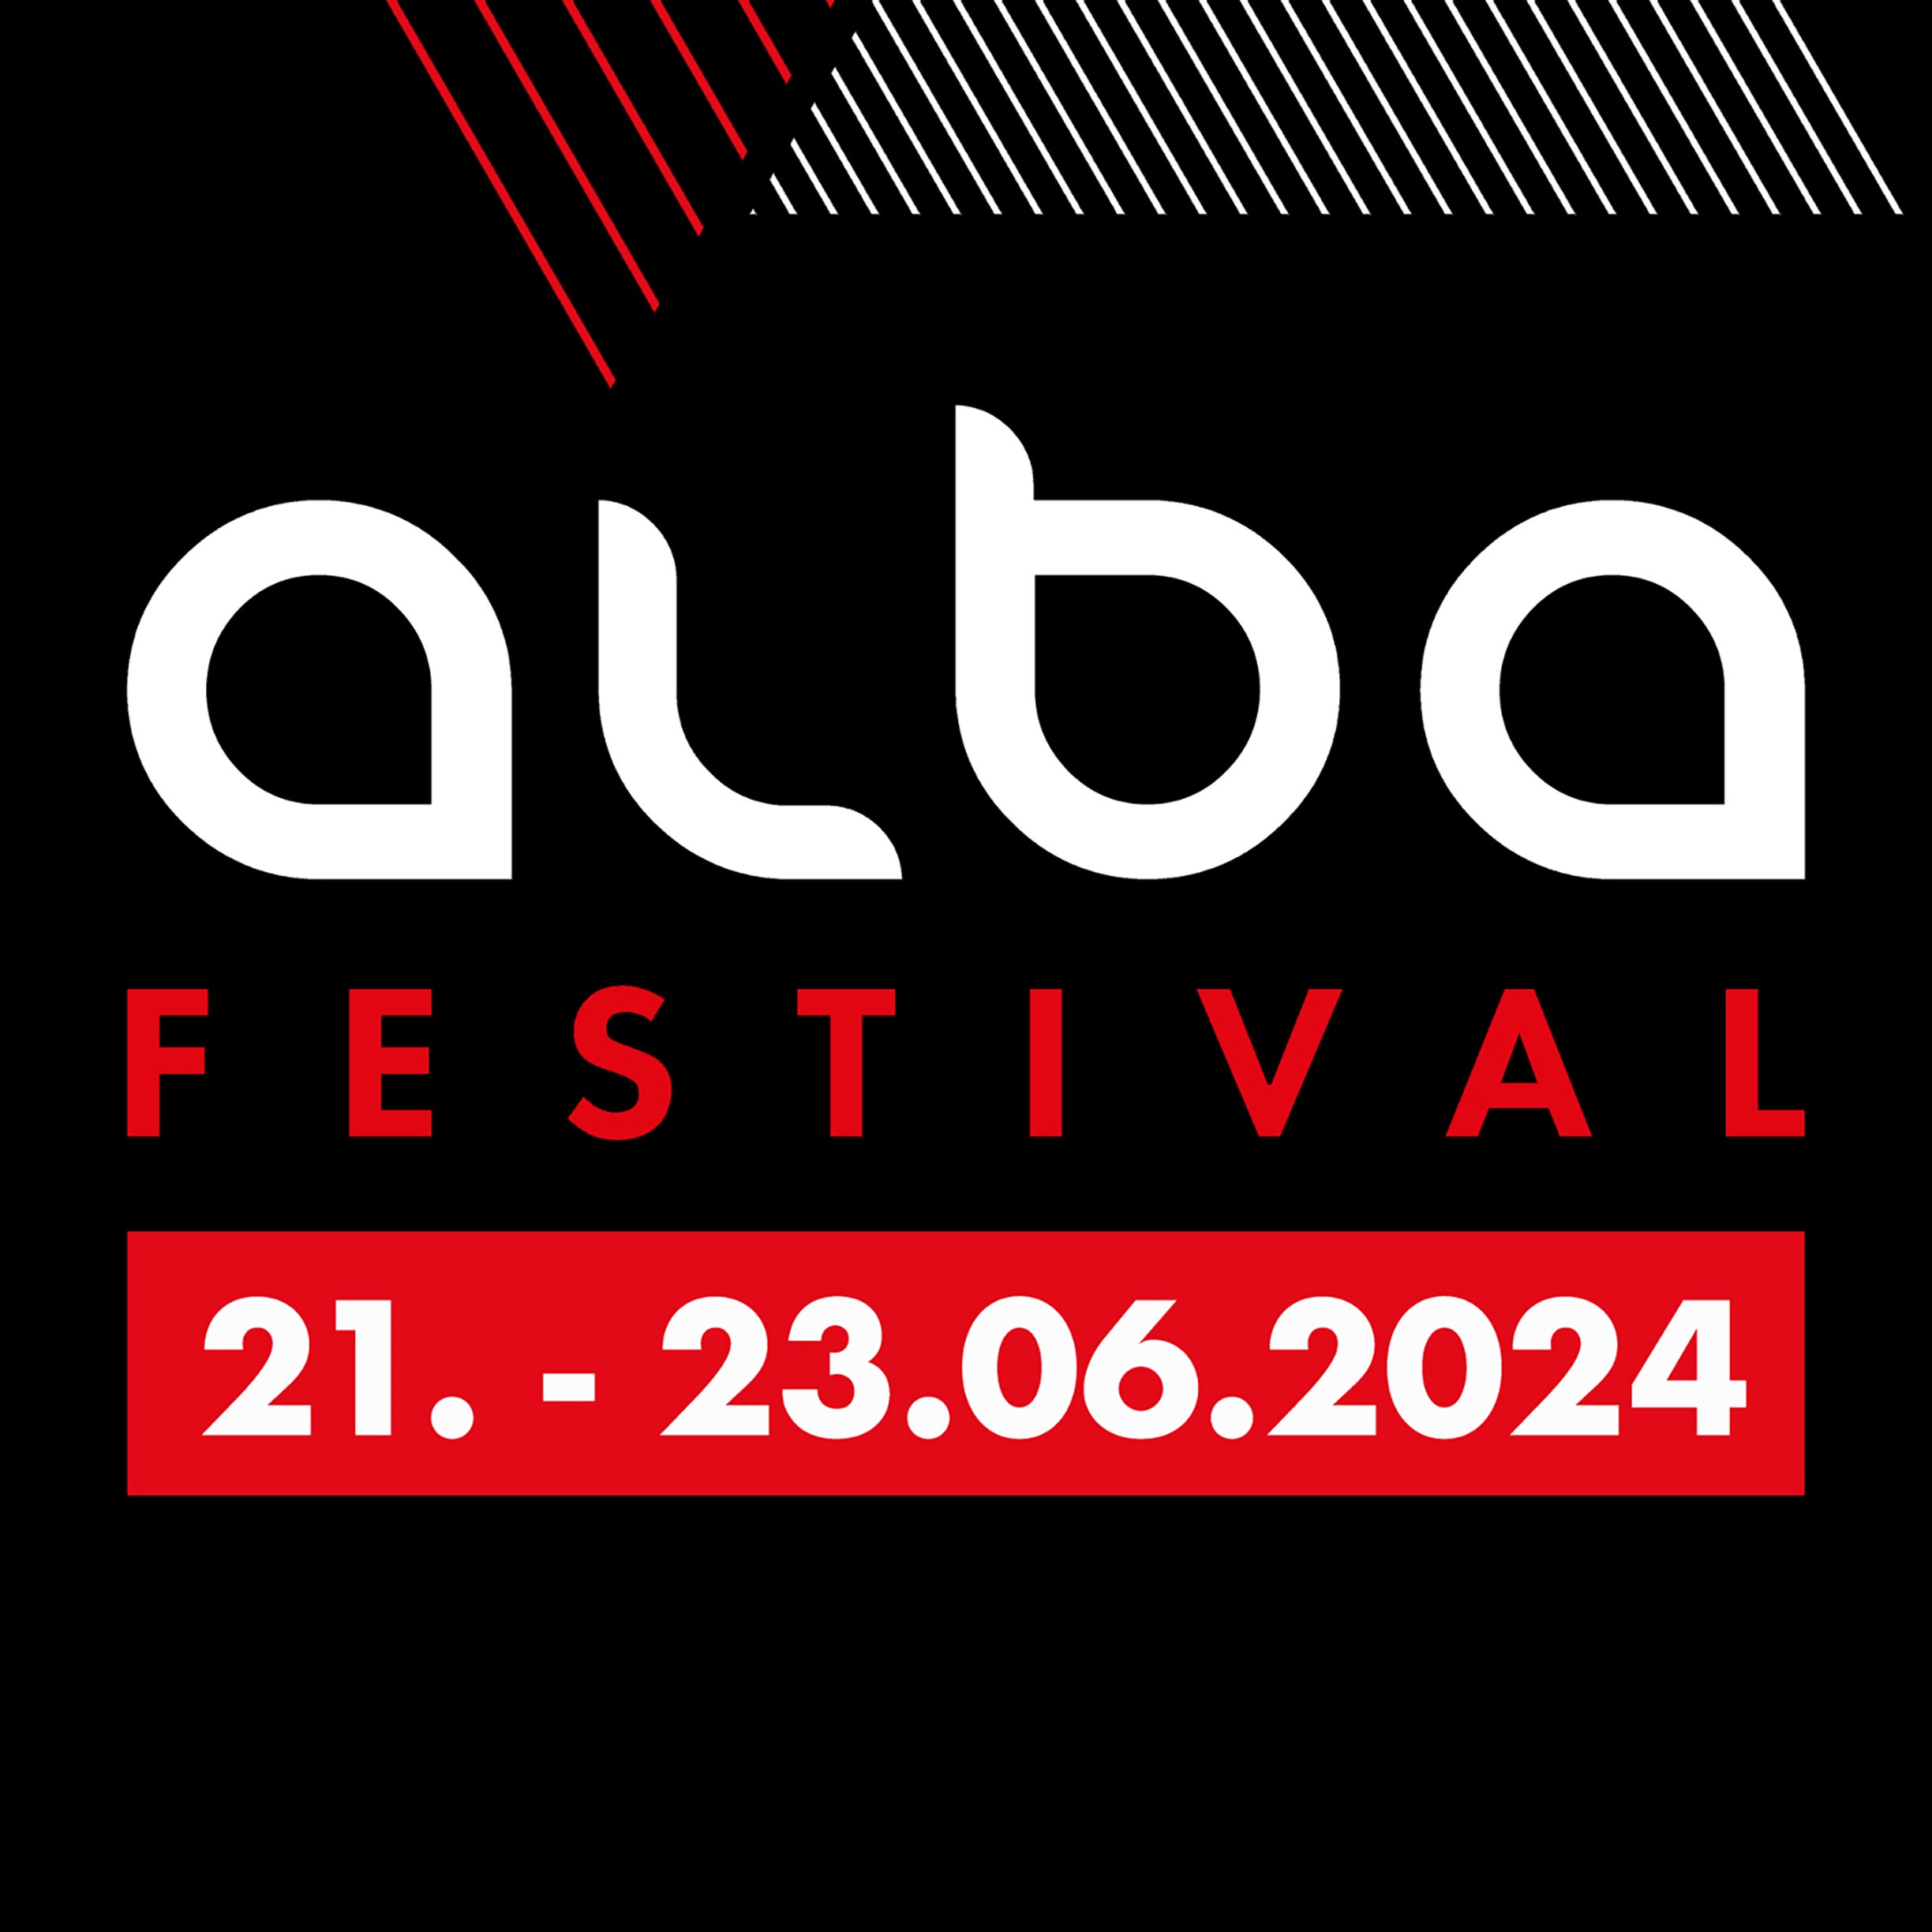 alba Festival presale information on freepresalepasswords.com